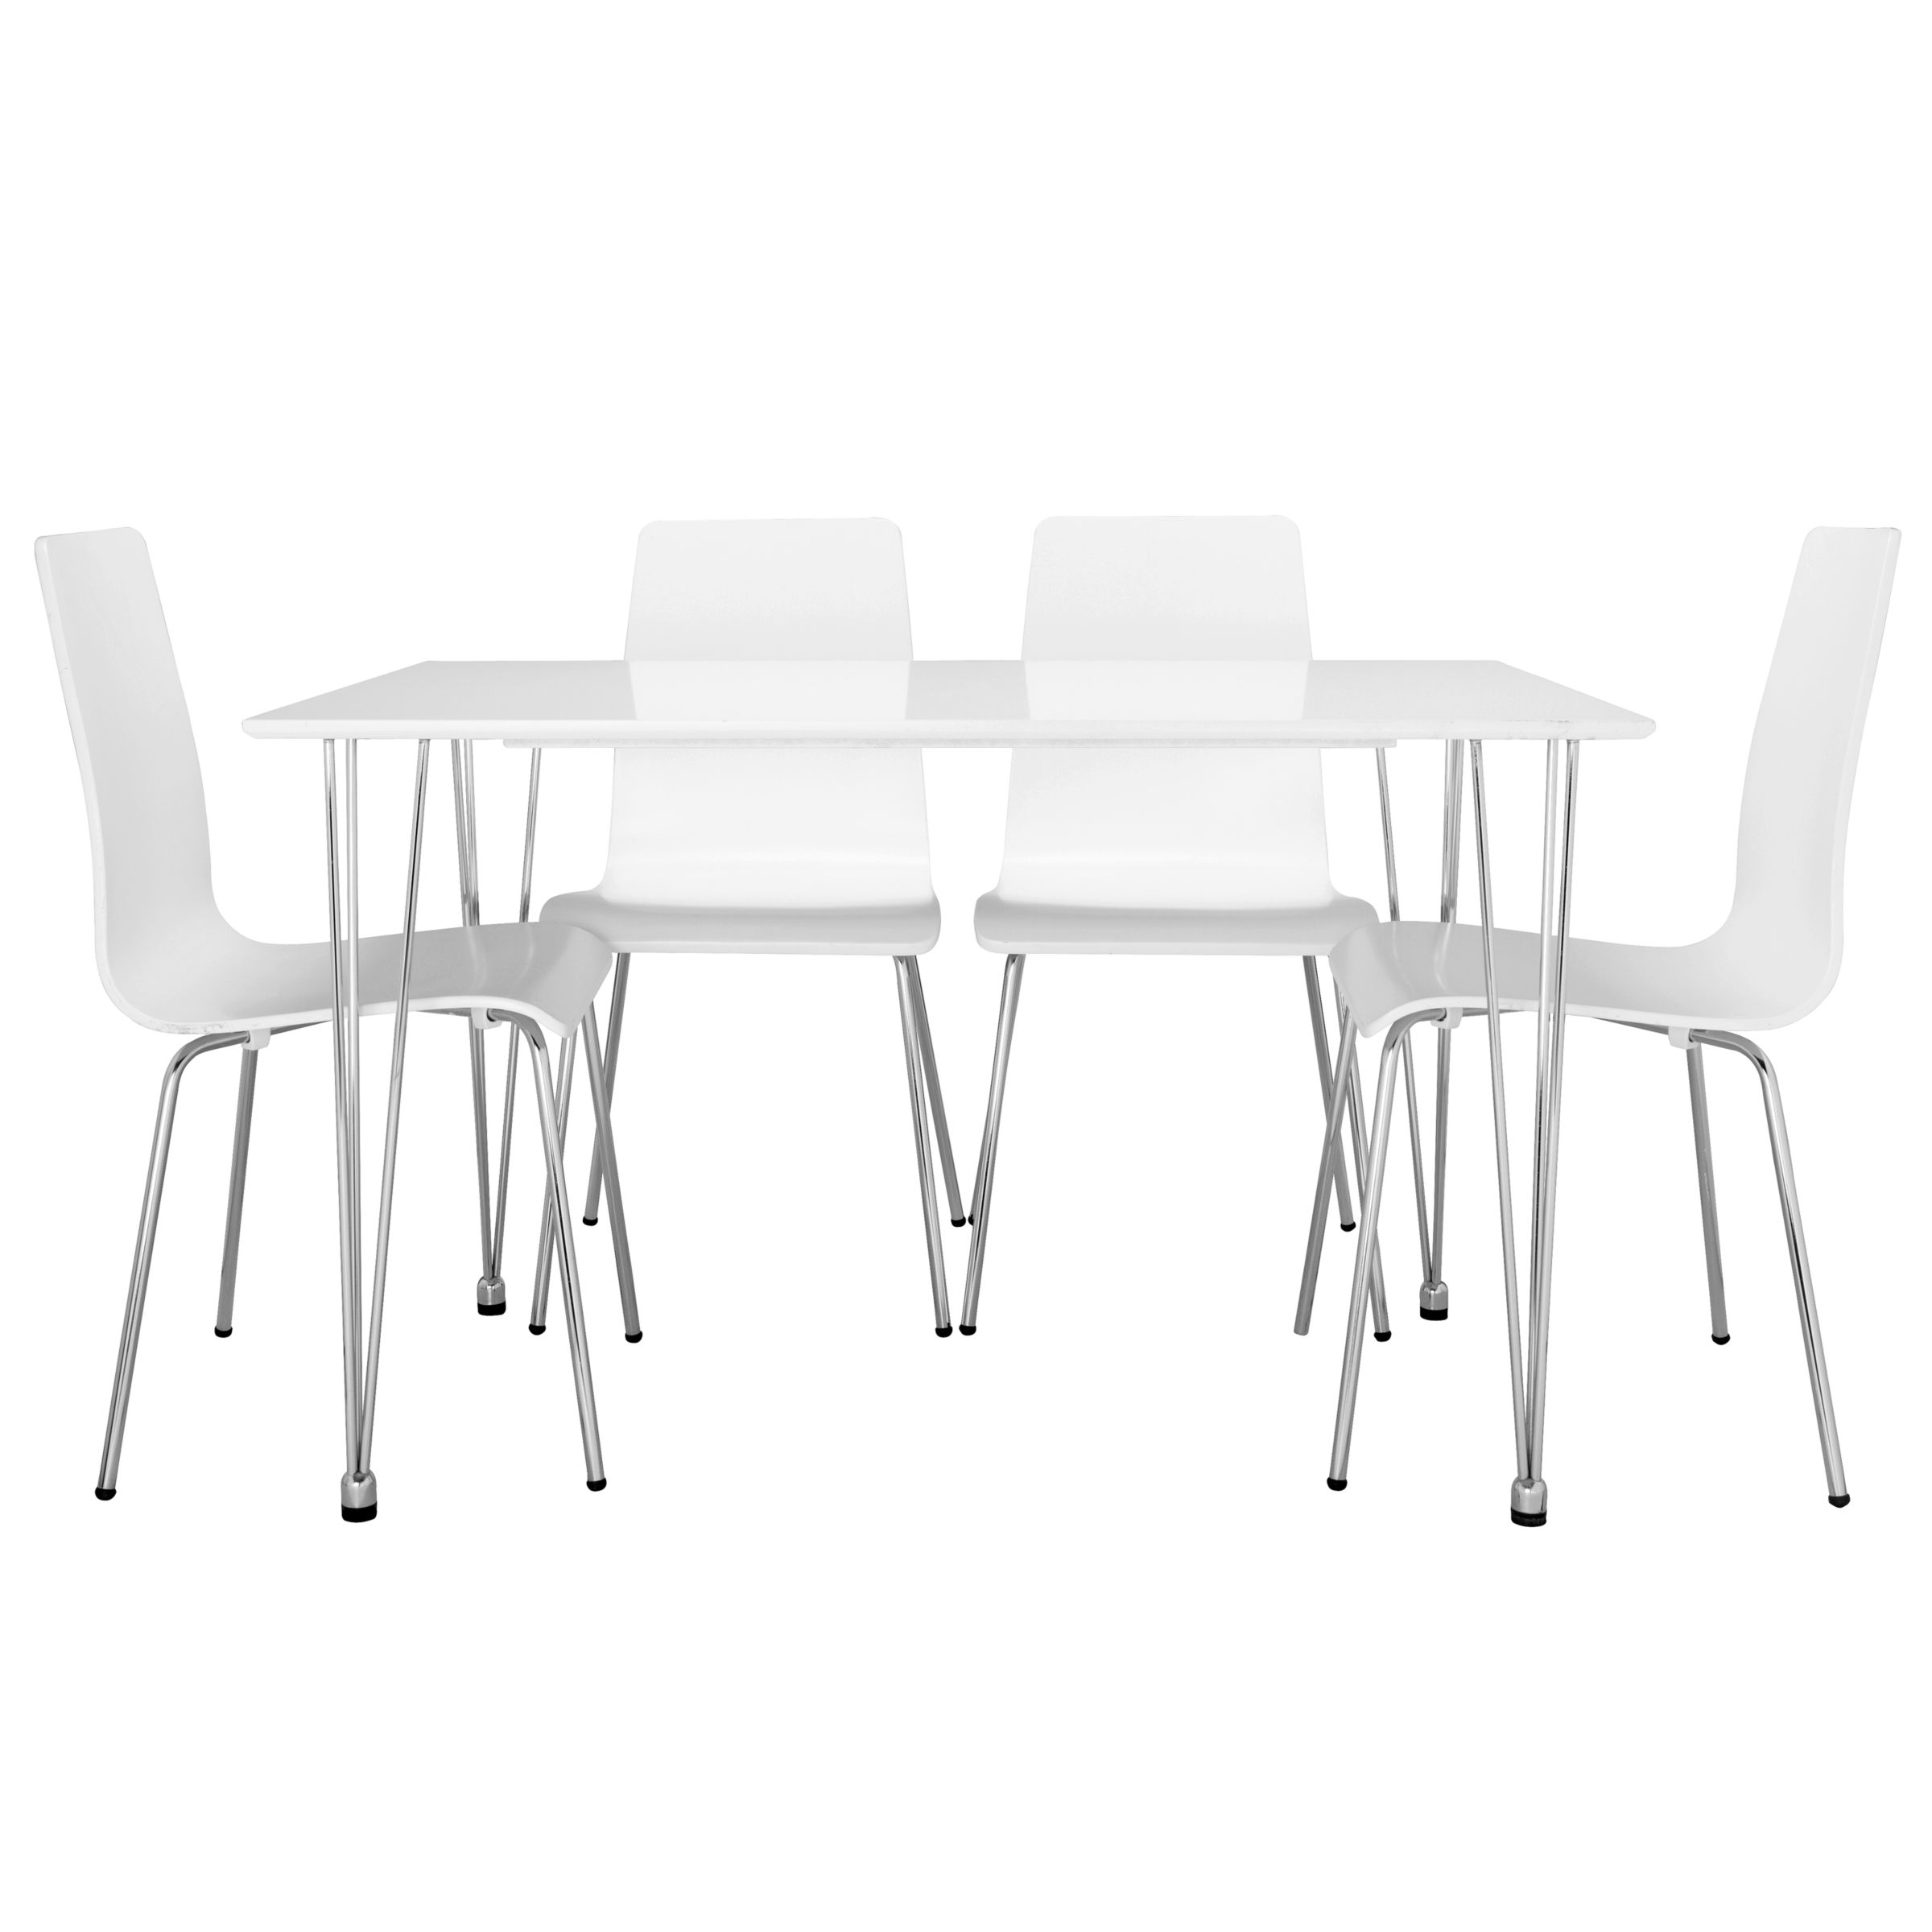 John Lewis Jasper Table and 4 Chairs Set, White/Chrome at John Lewis